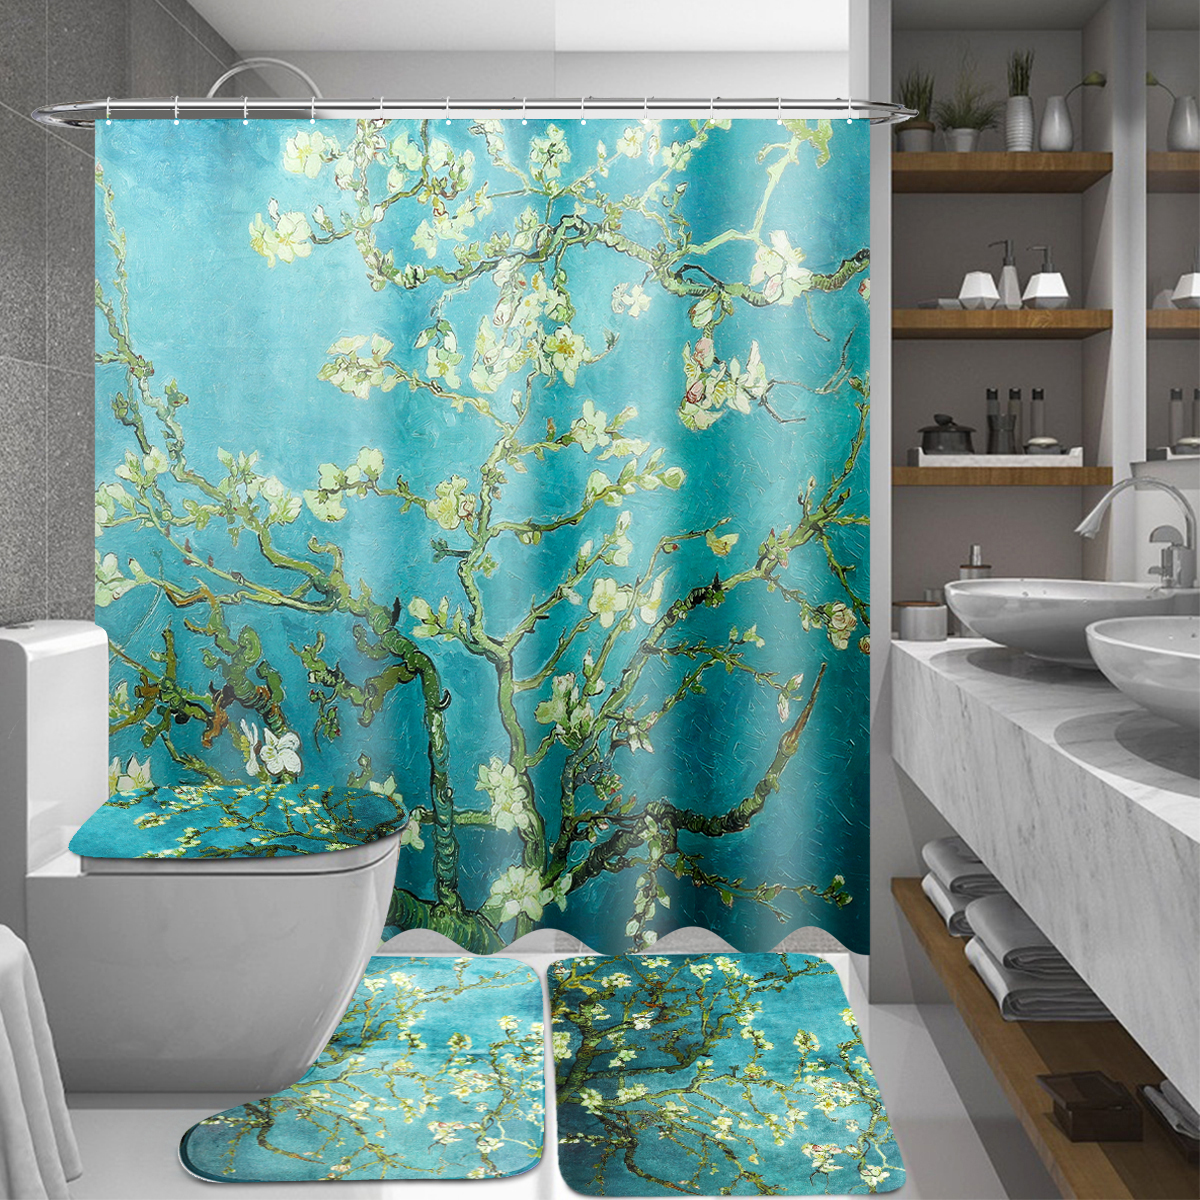 Flower-Waterproof-Shower-Curtain-Waterproof-Polyester-Fabric-Bathroom-Curtains-for-12-Hooks-1552627-1